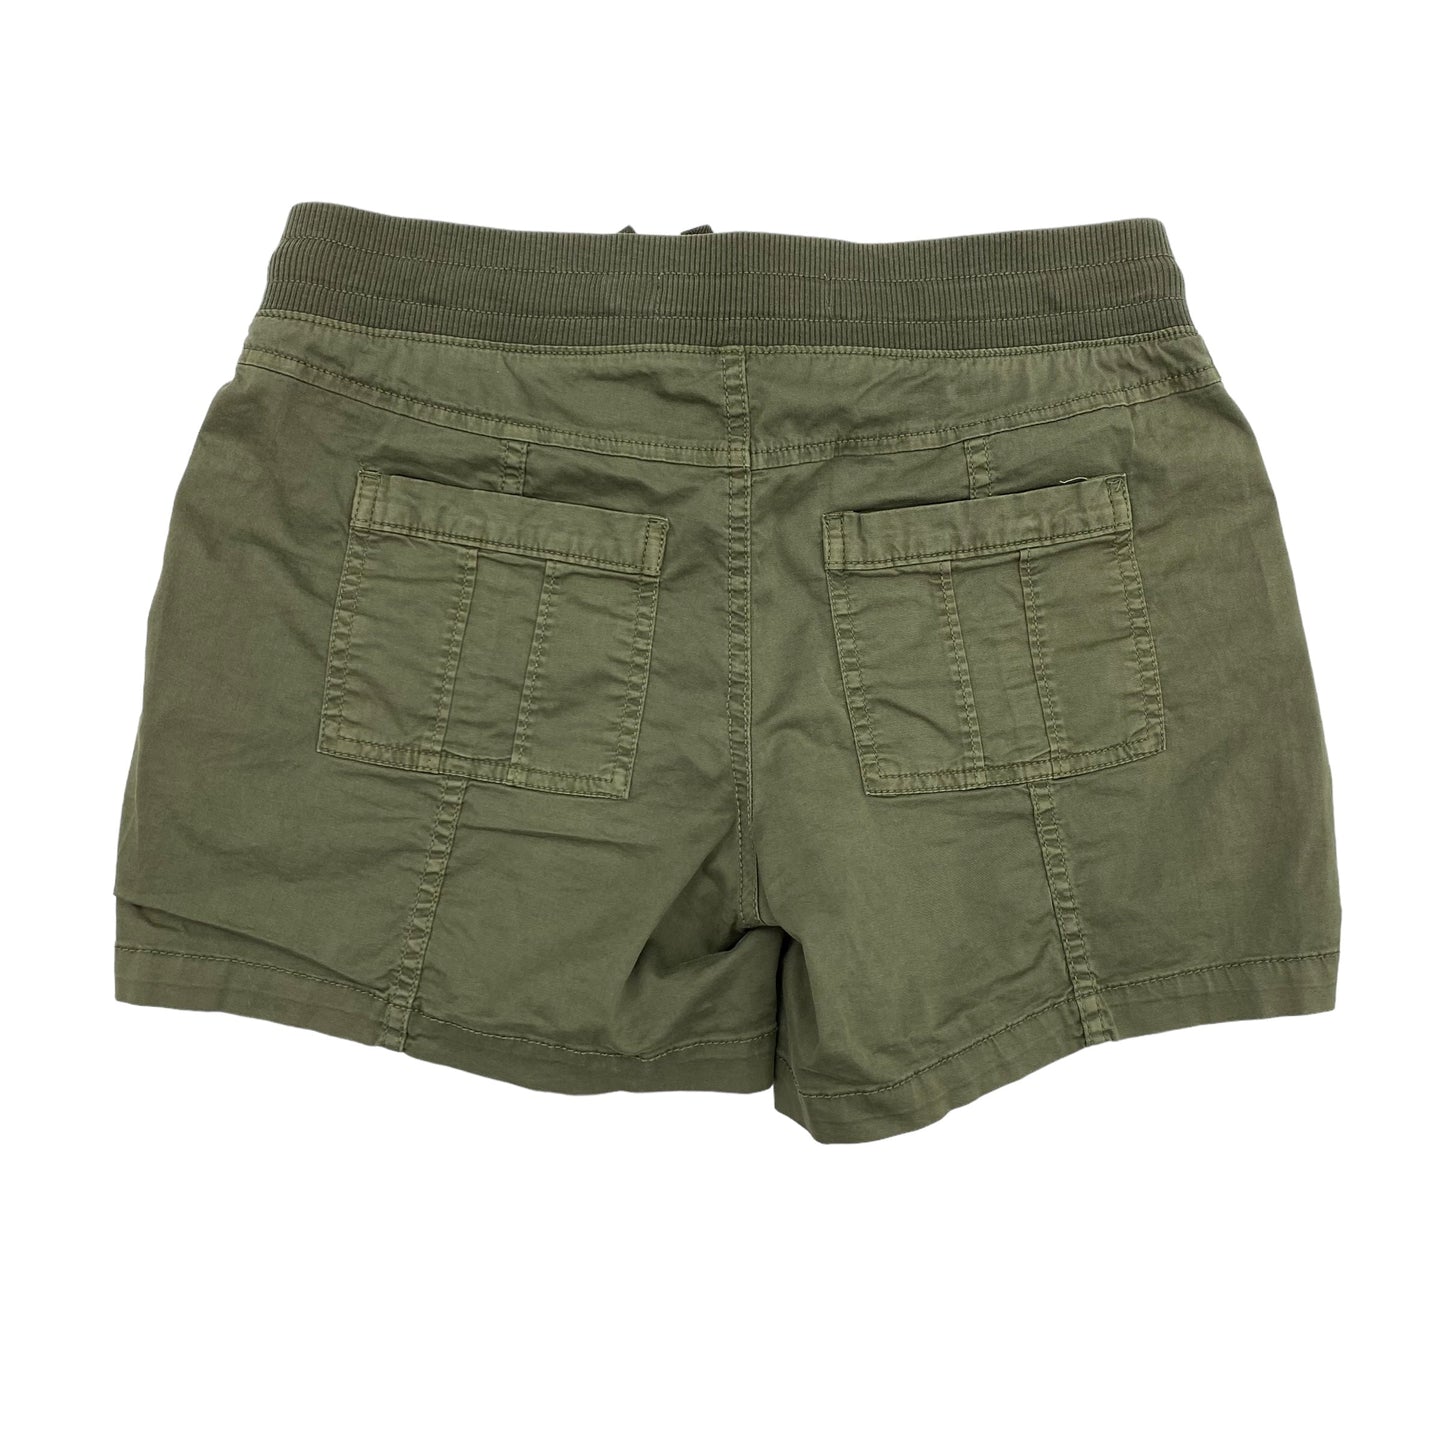 Green Shorts Sonoma, Size 4